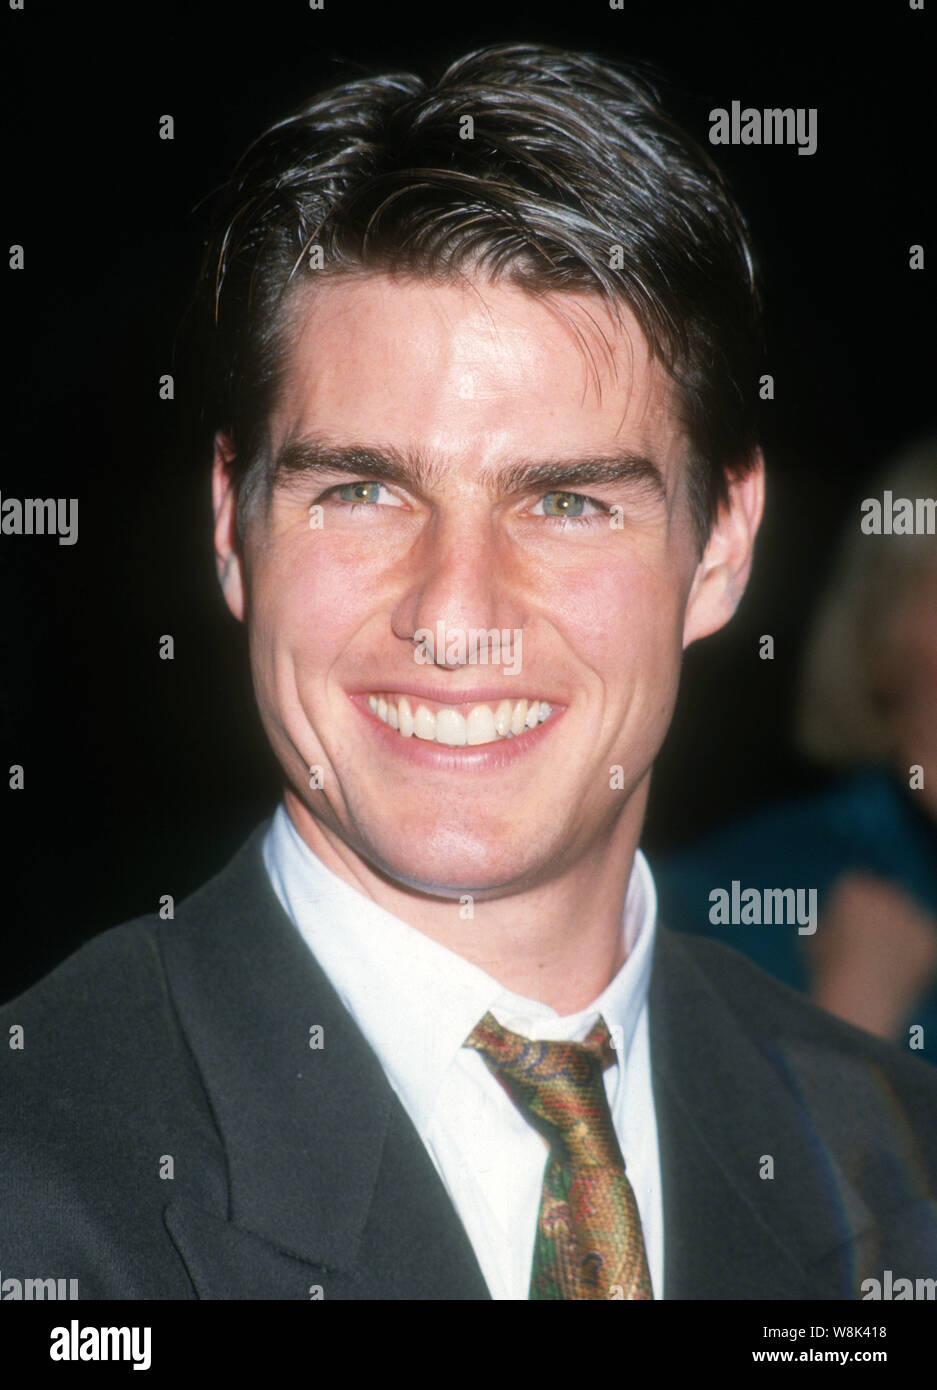 Hollywood Star Actor Tom Cruise Stock Photos & Hollywood Star Actor Tom ...